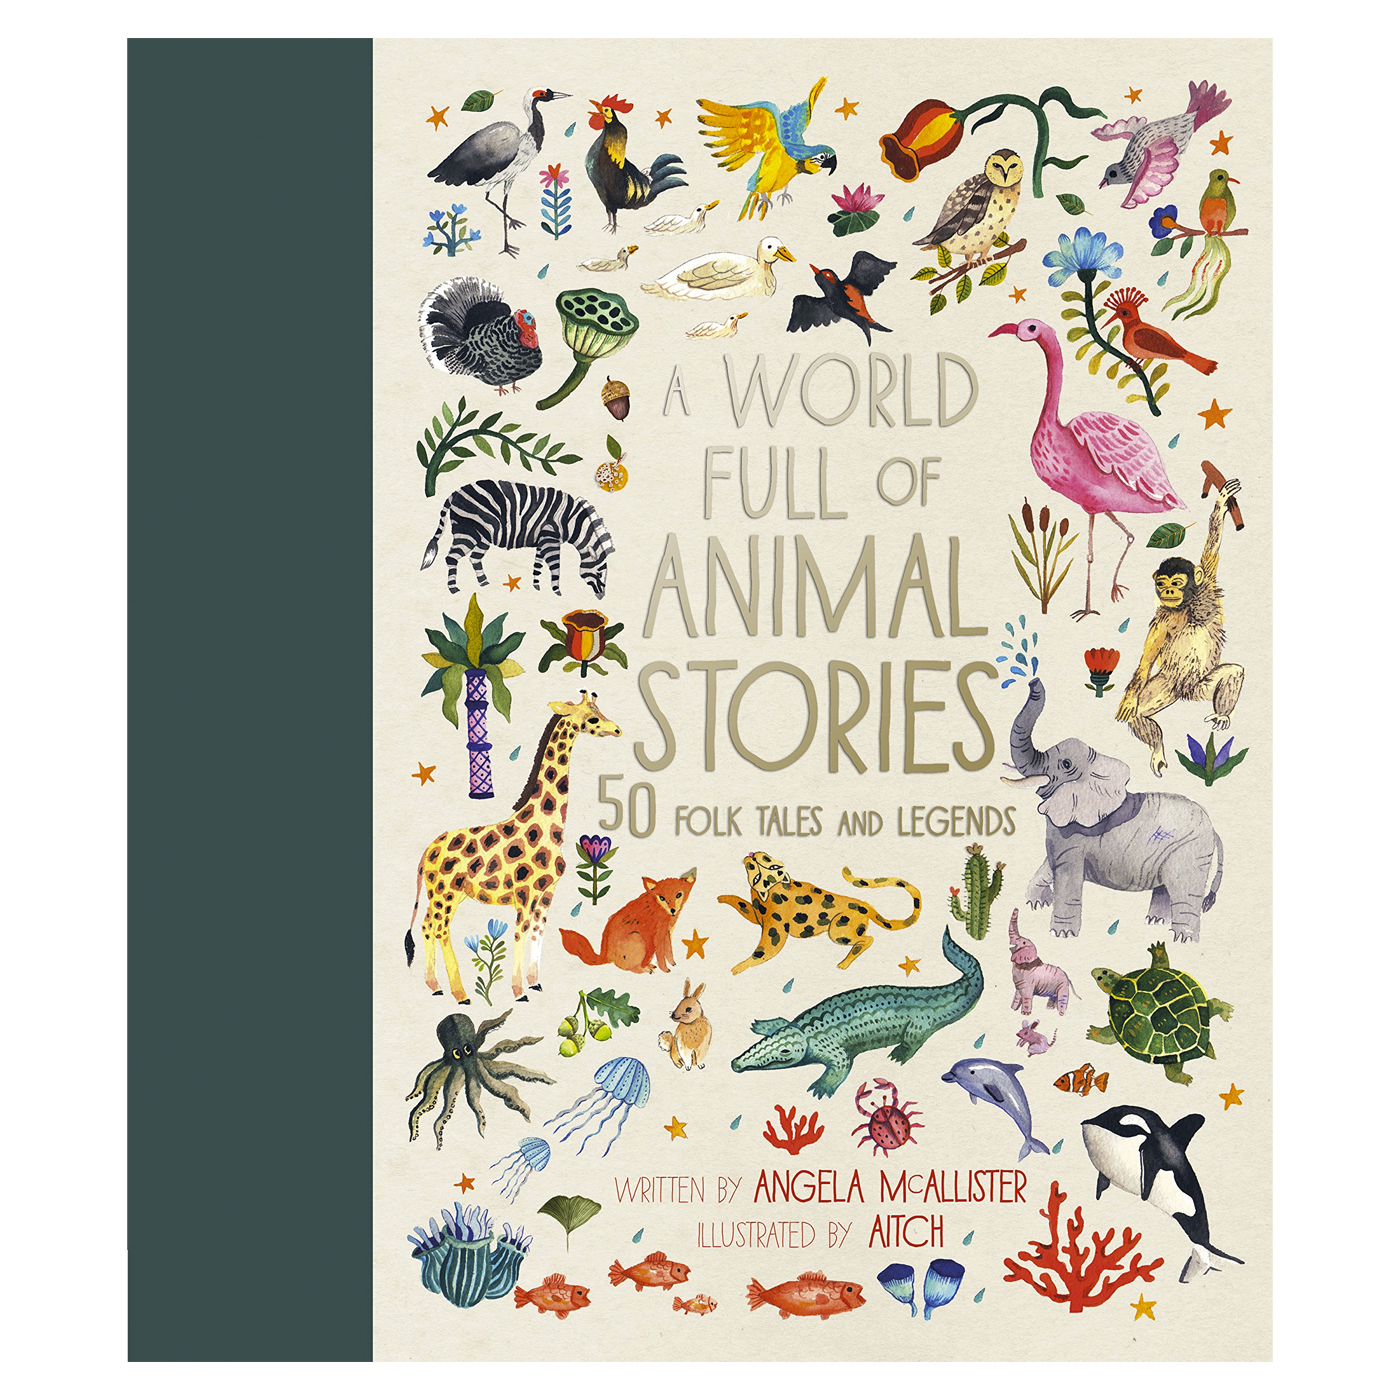  A World Full of Animal Stories